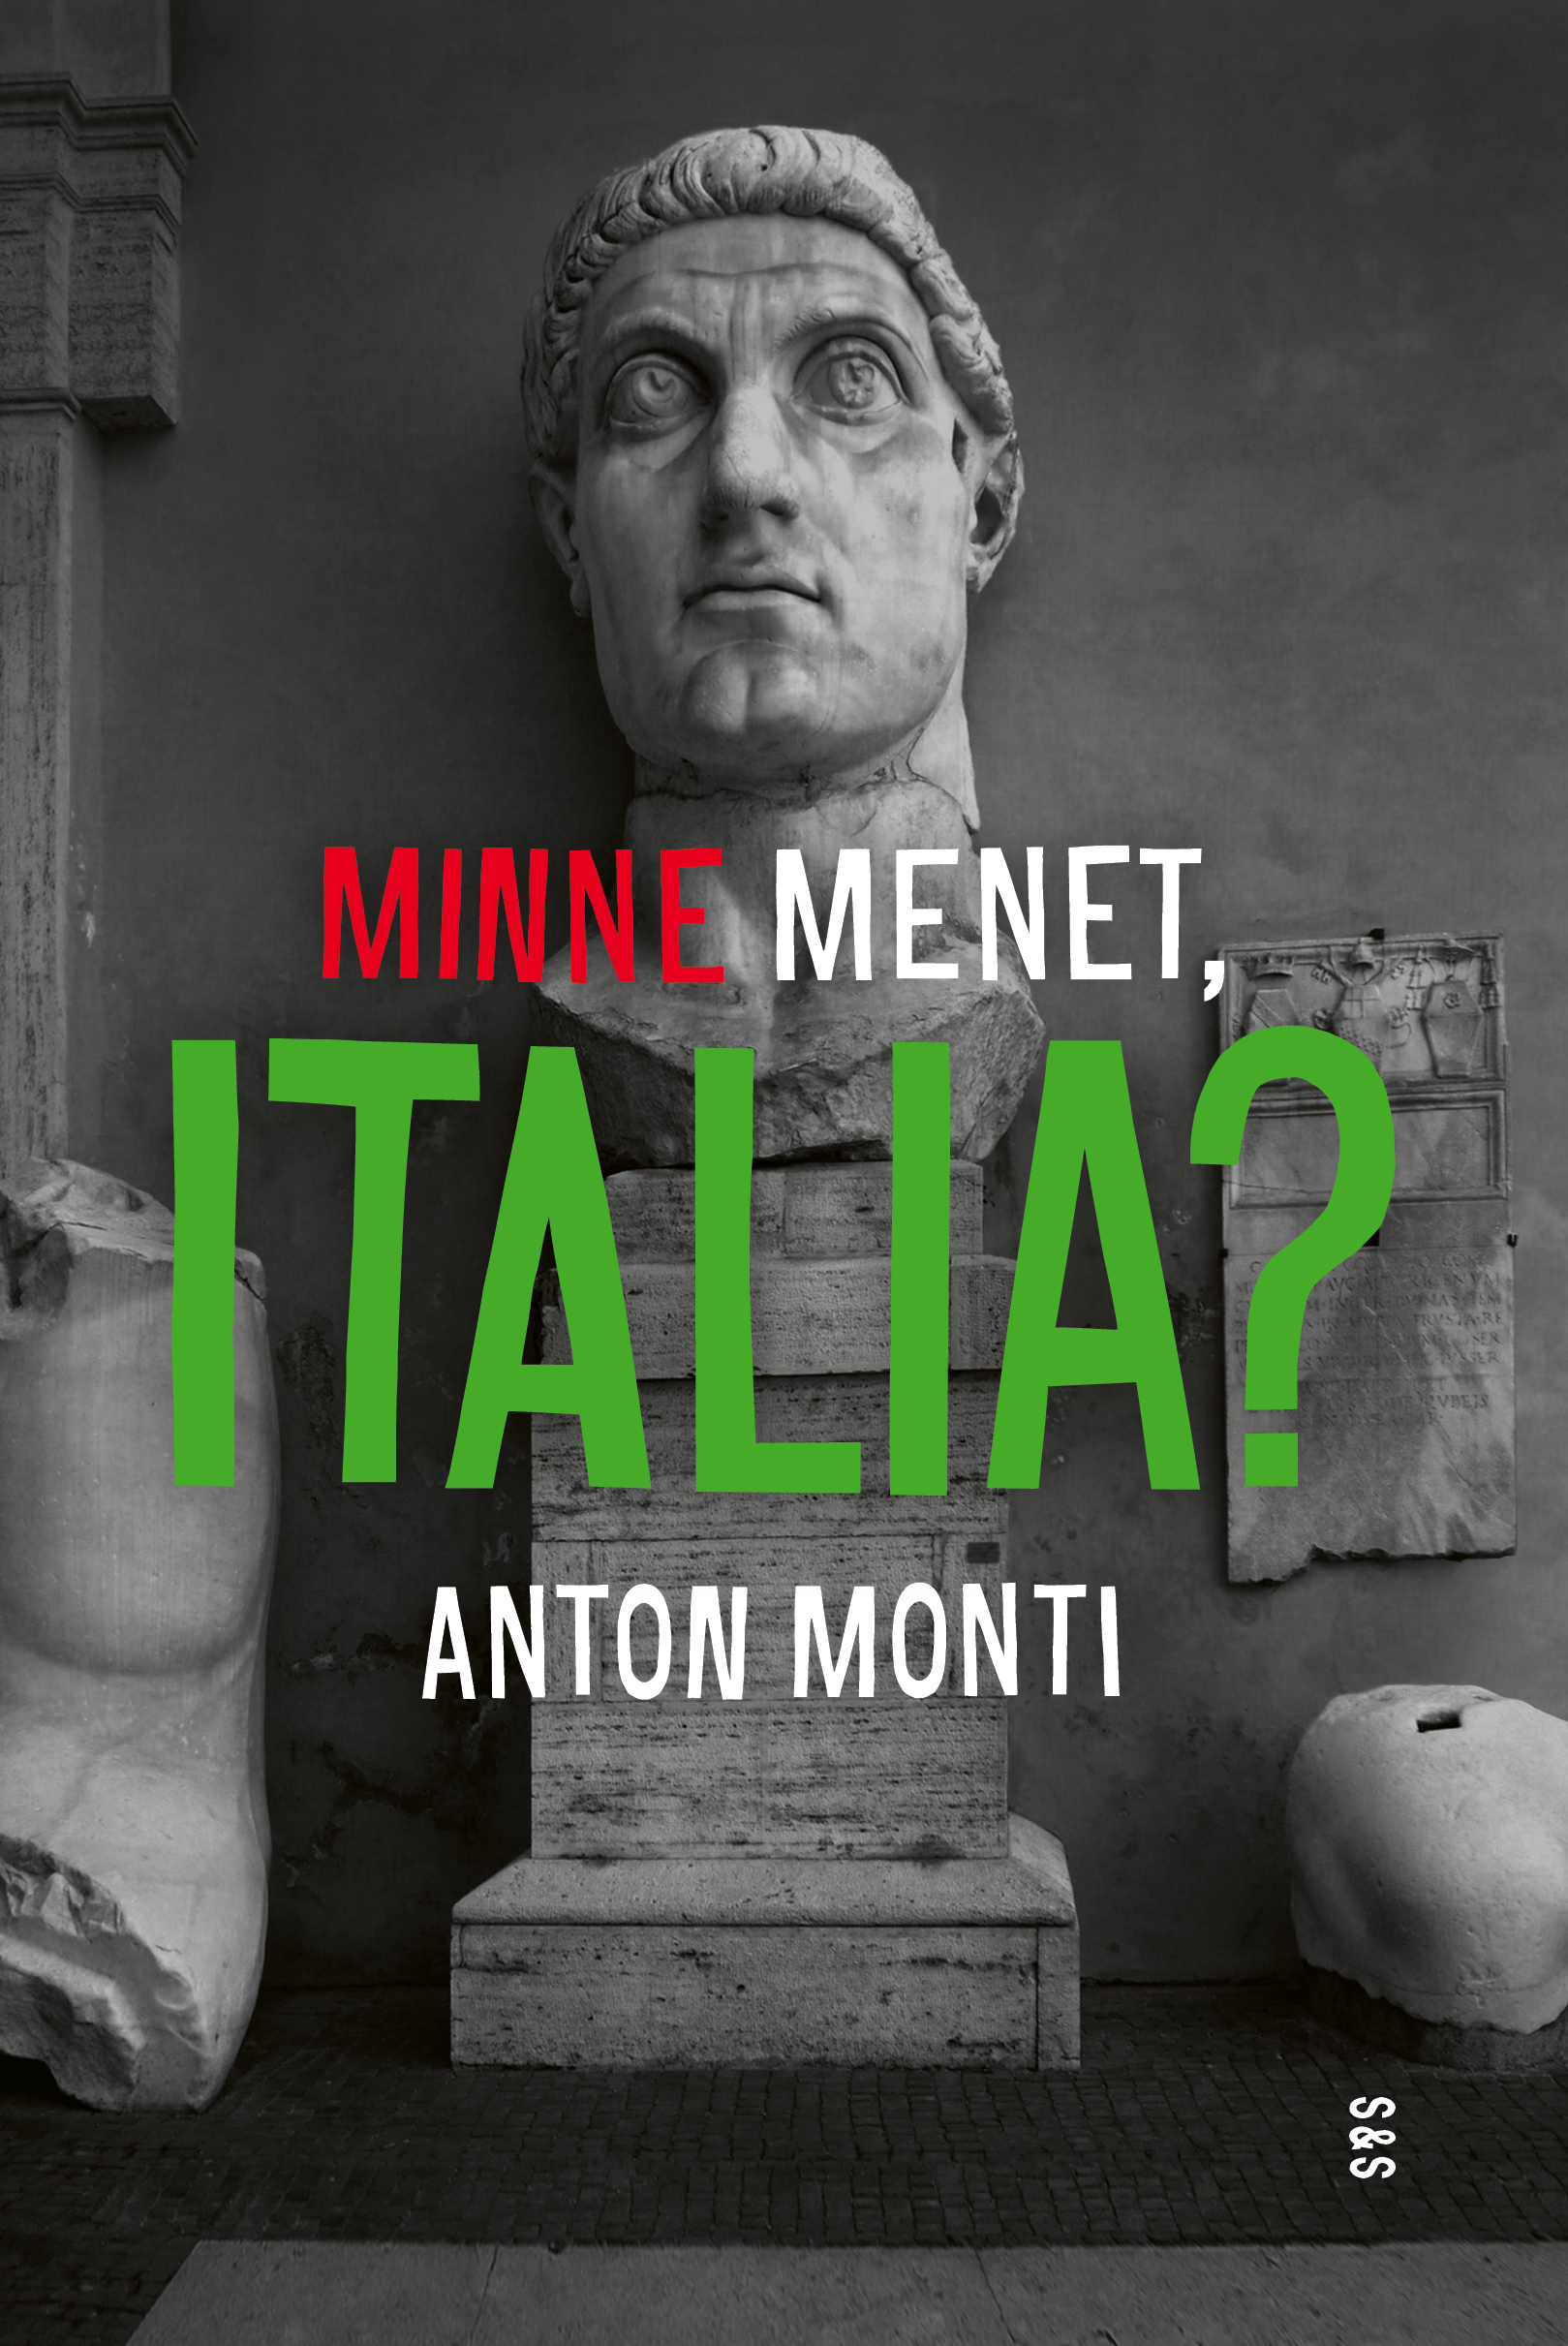 Monti, Anton - Minne menet, Italia?, e-kirja